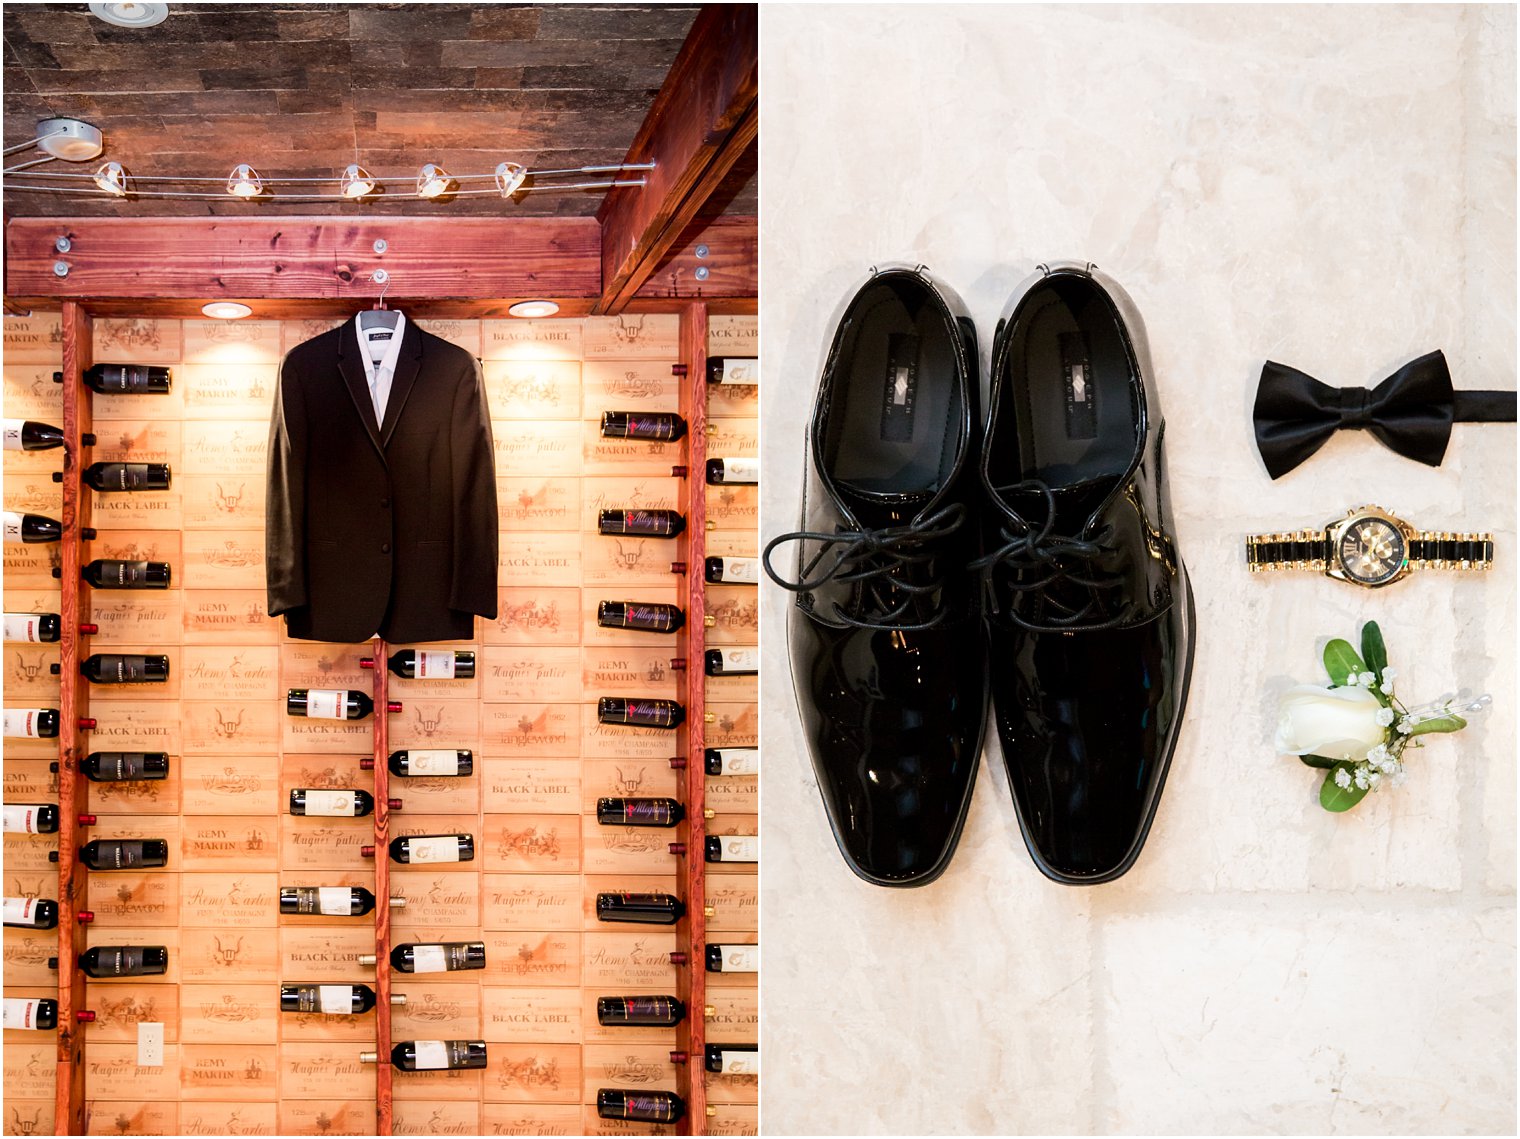 Groom tuxedo, watch, boutonniere | Photos by Idalia Photography